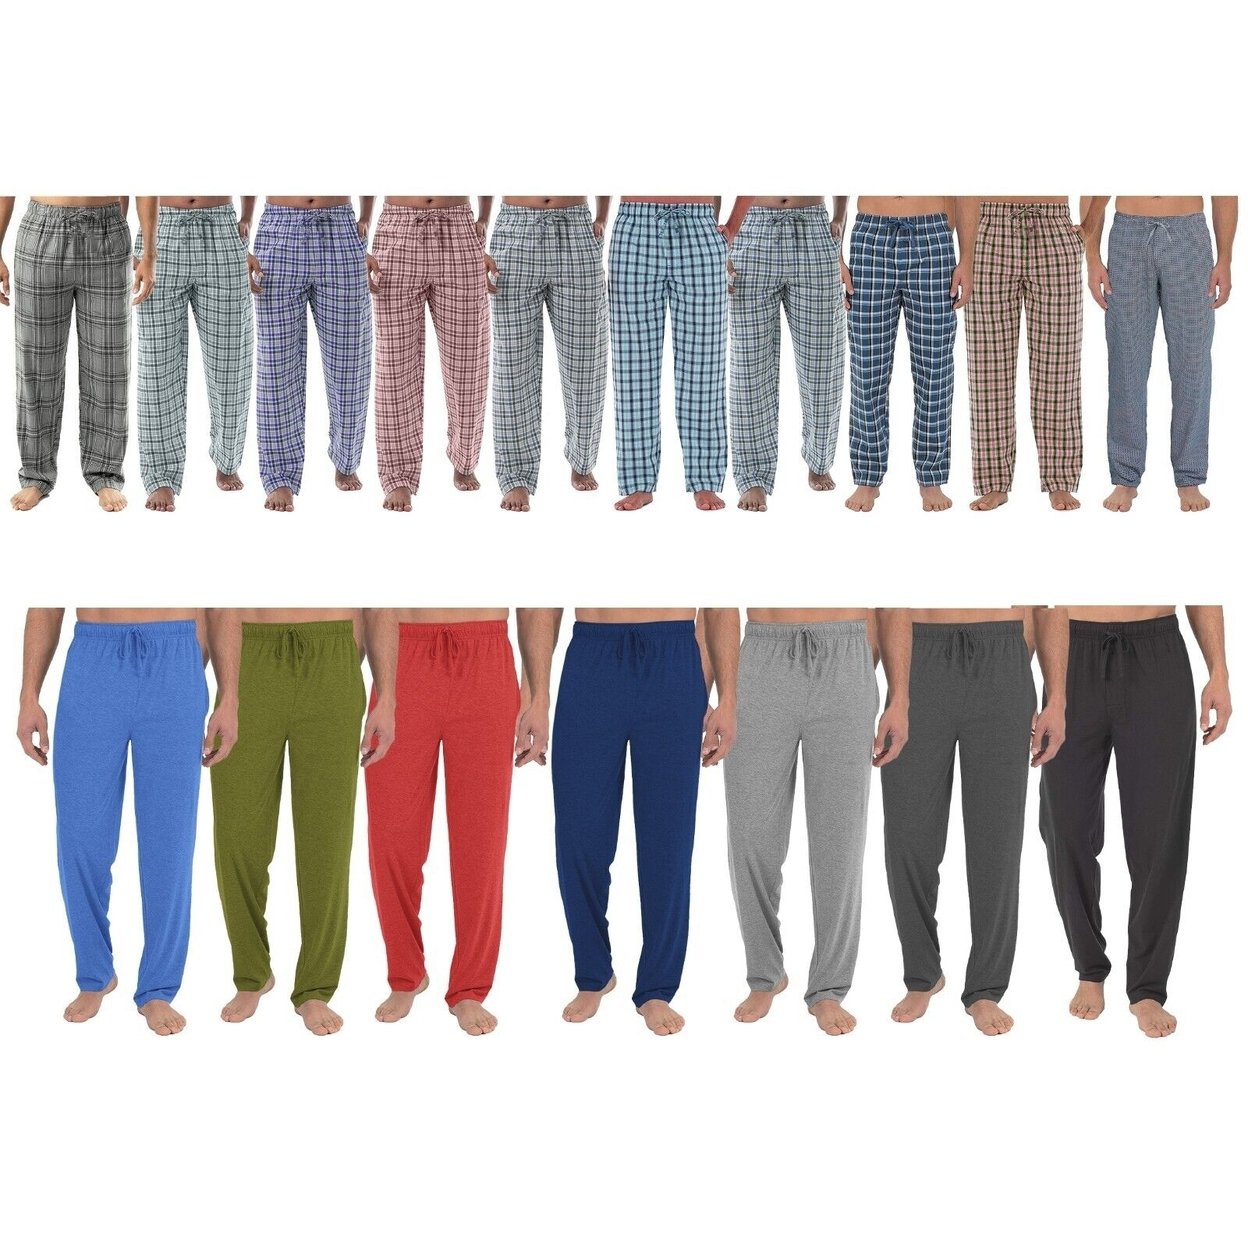 2-Pack: Men's Ultra-Soft Solid & Plaid Cotton Jersey Knit Comfy Sleep Lounge Pajama Pants - Plaid, Medium